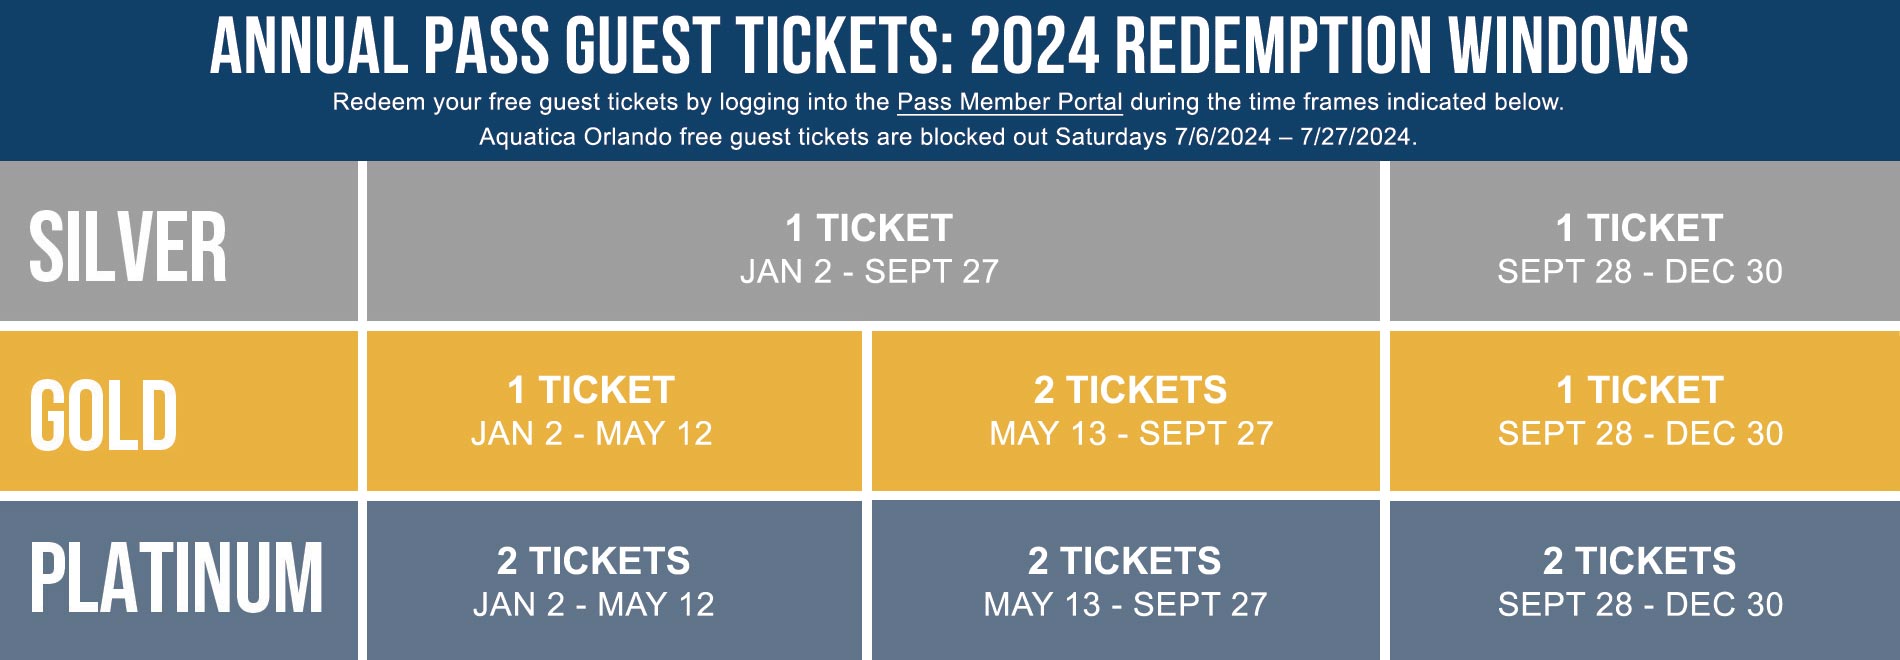 Annual Pass Guest Tickets 2024 Redemption Windows